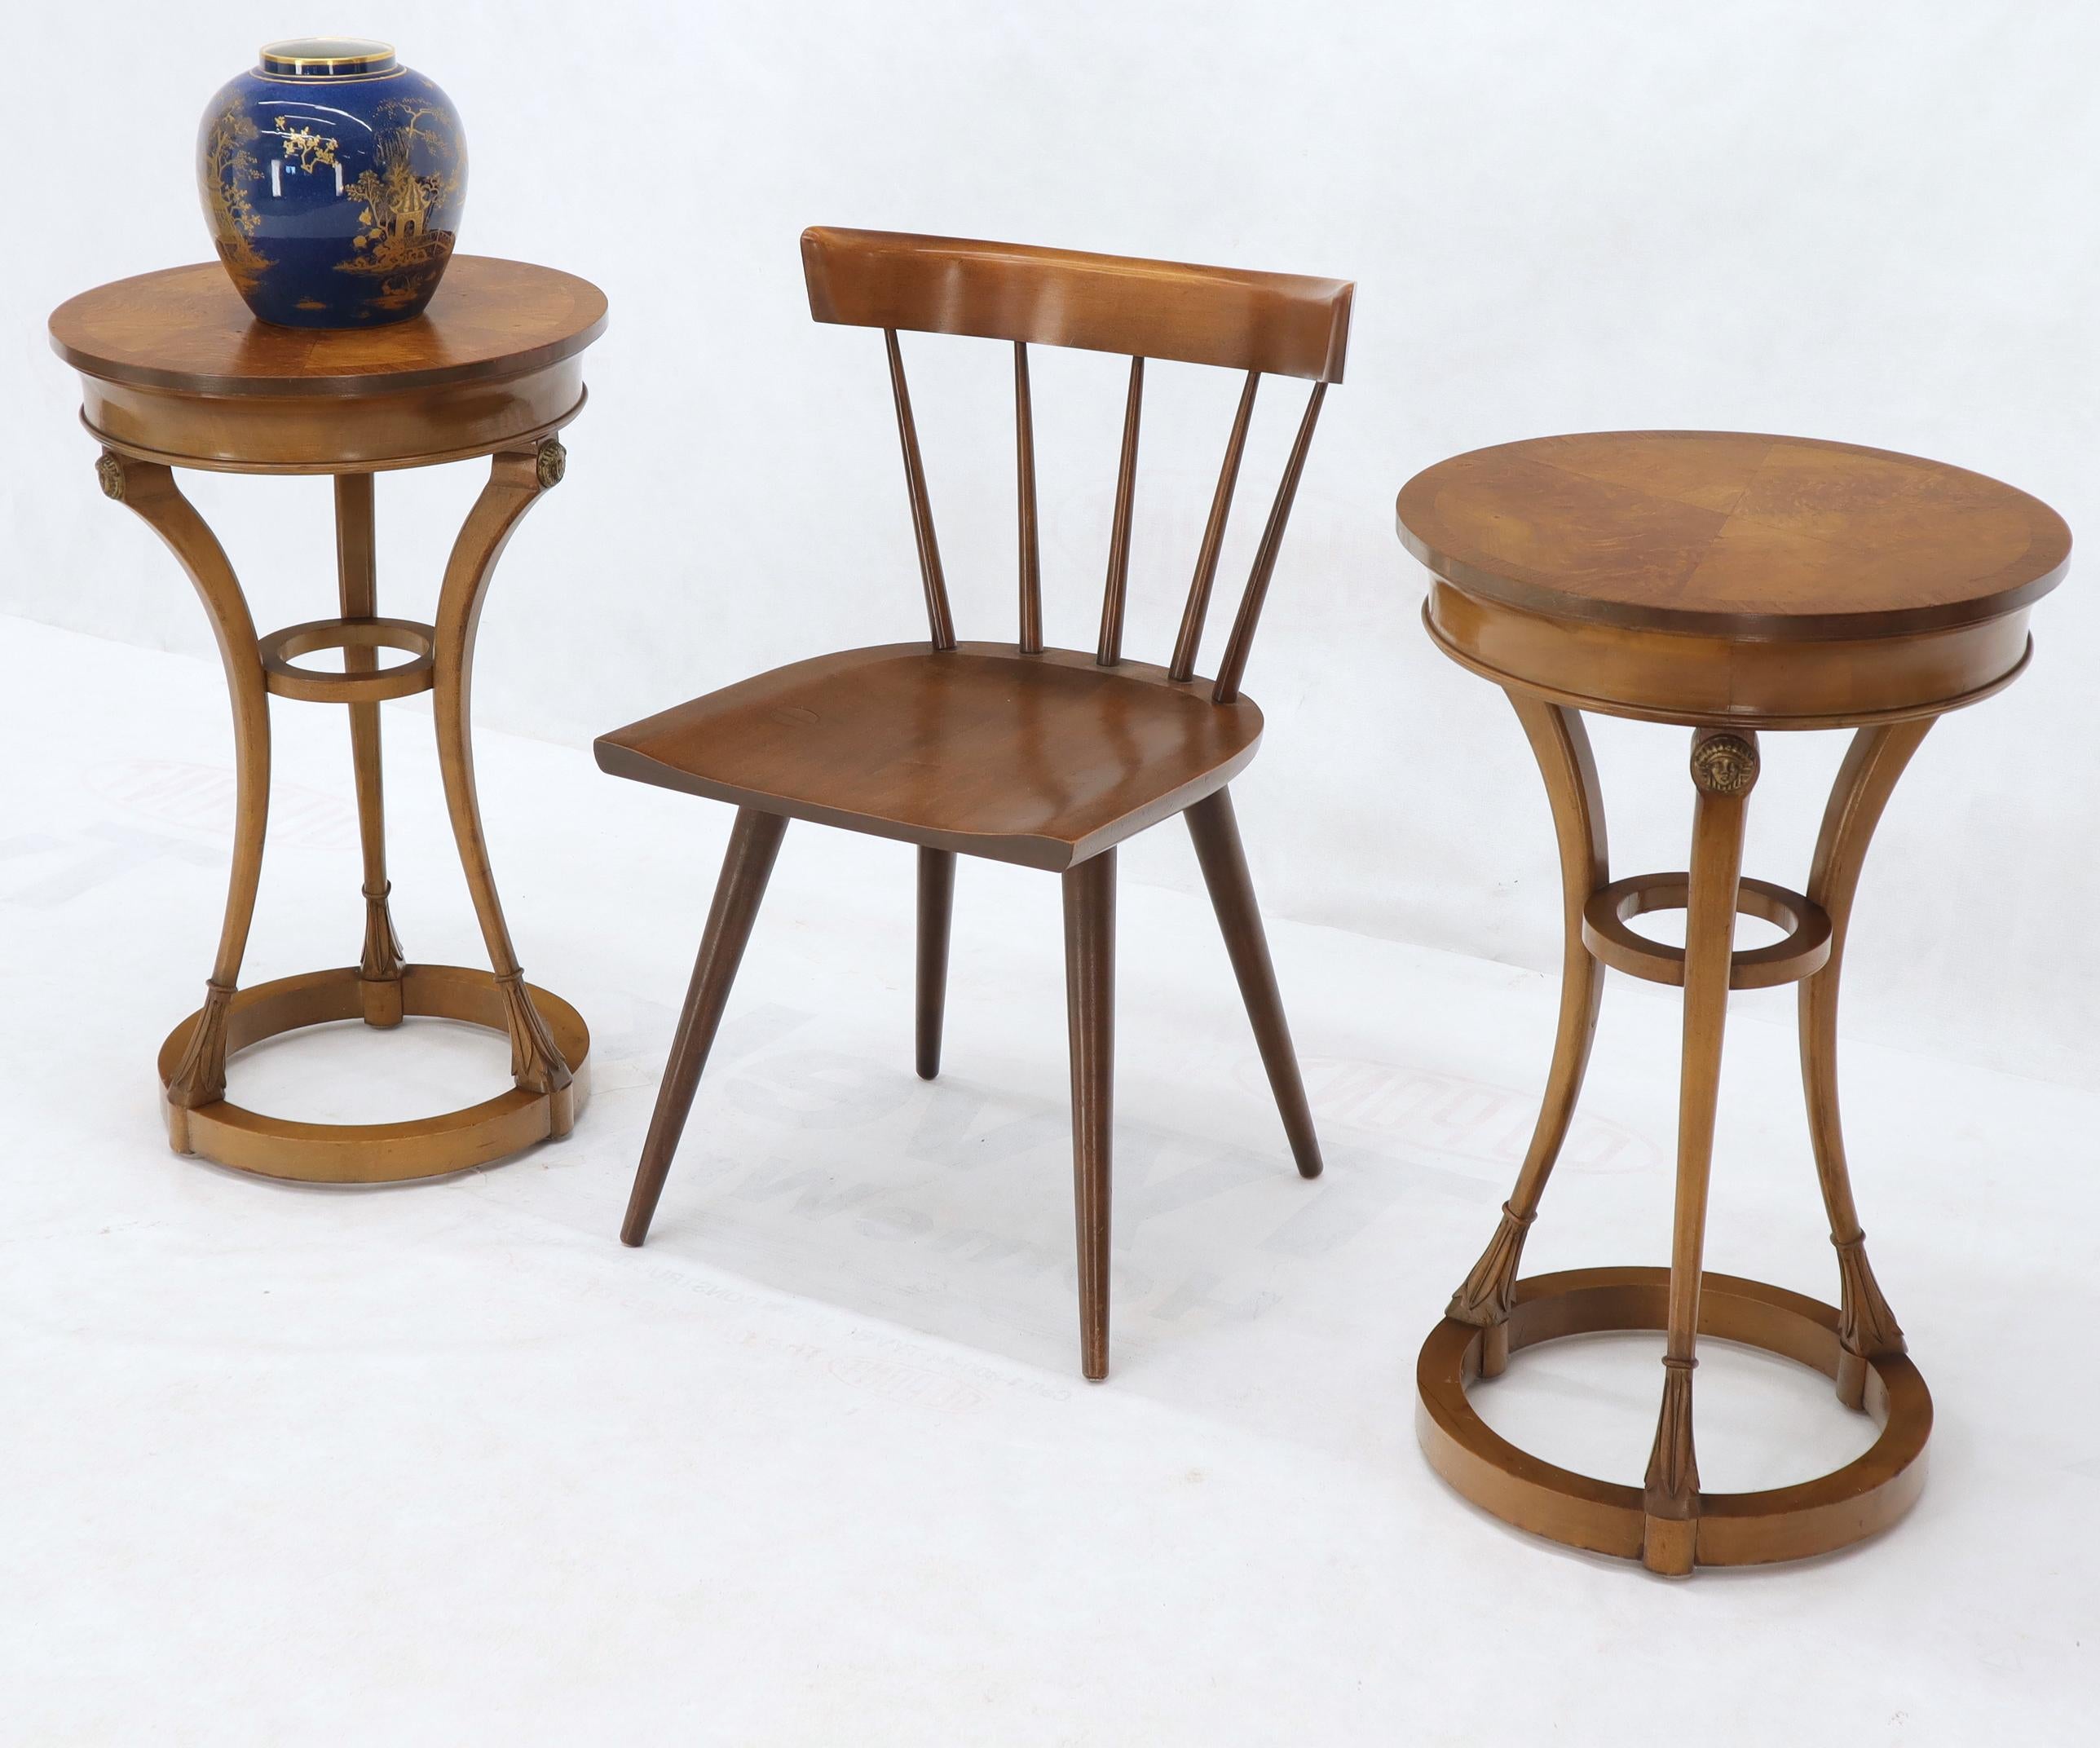 Round burl wood tops neoclassical guerdons pedestals shape tables. Baker quality.